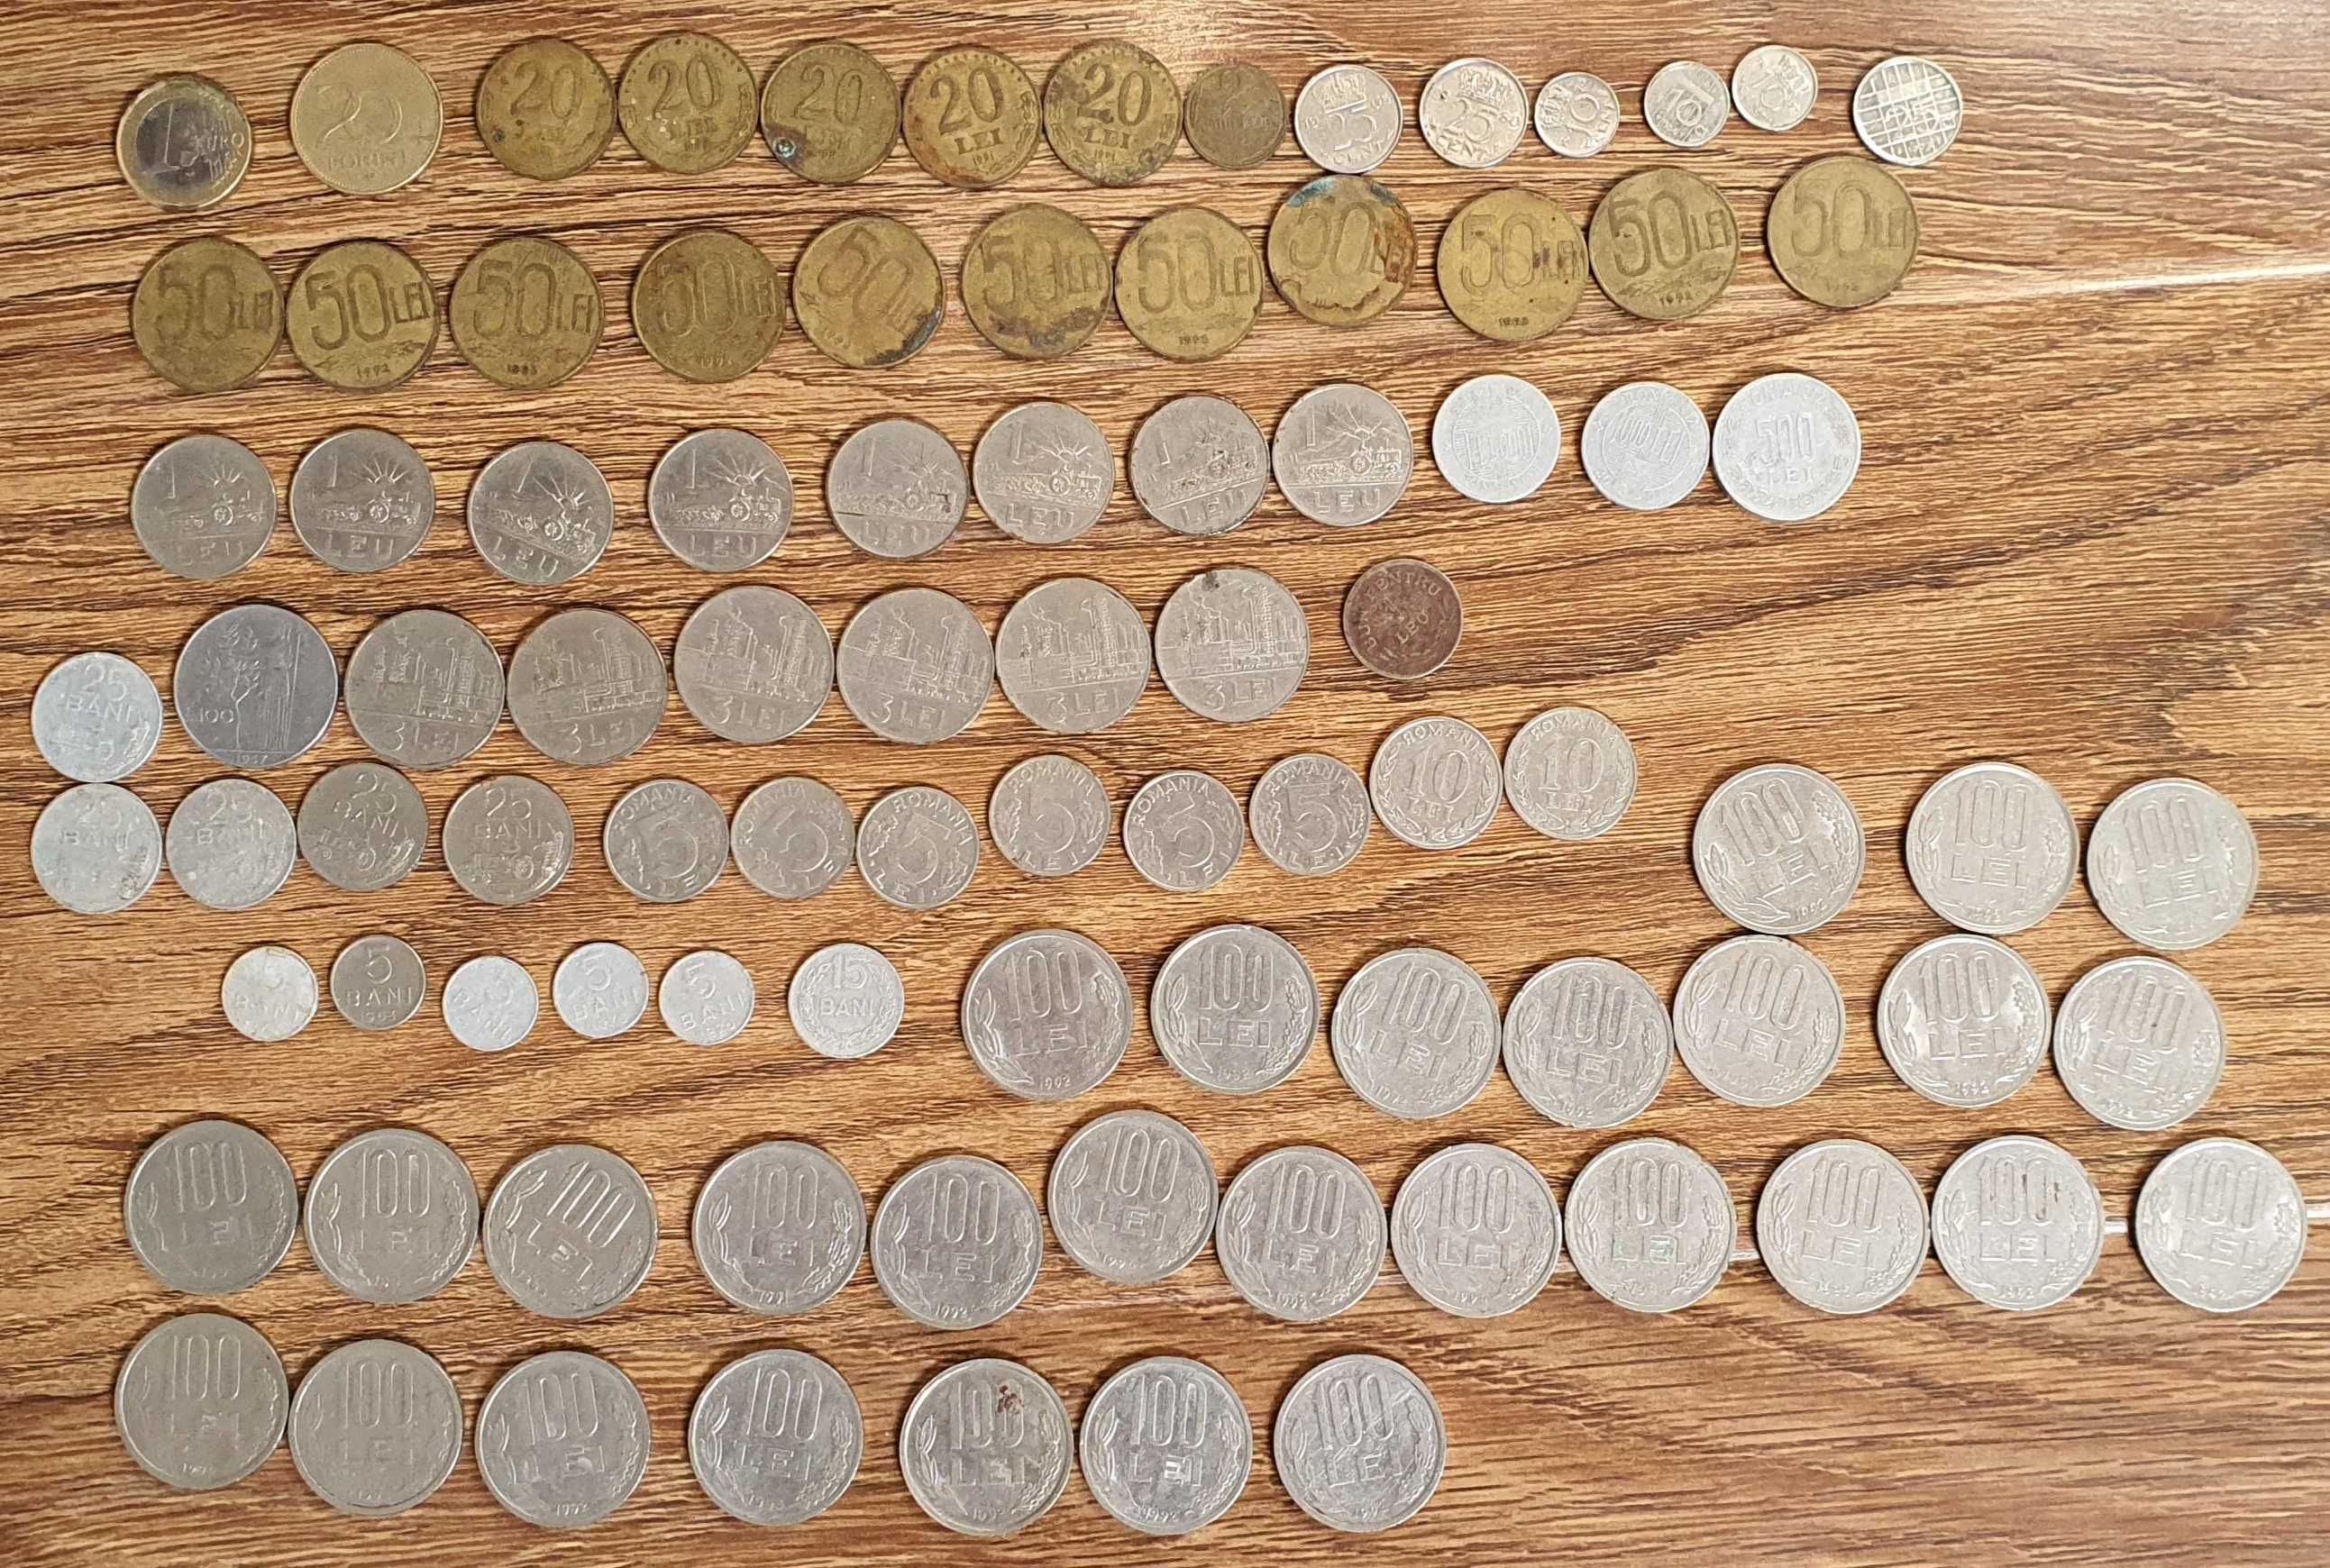 Vand bancnote si monede vechi(colectie personala)